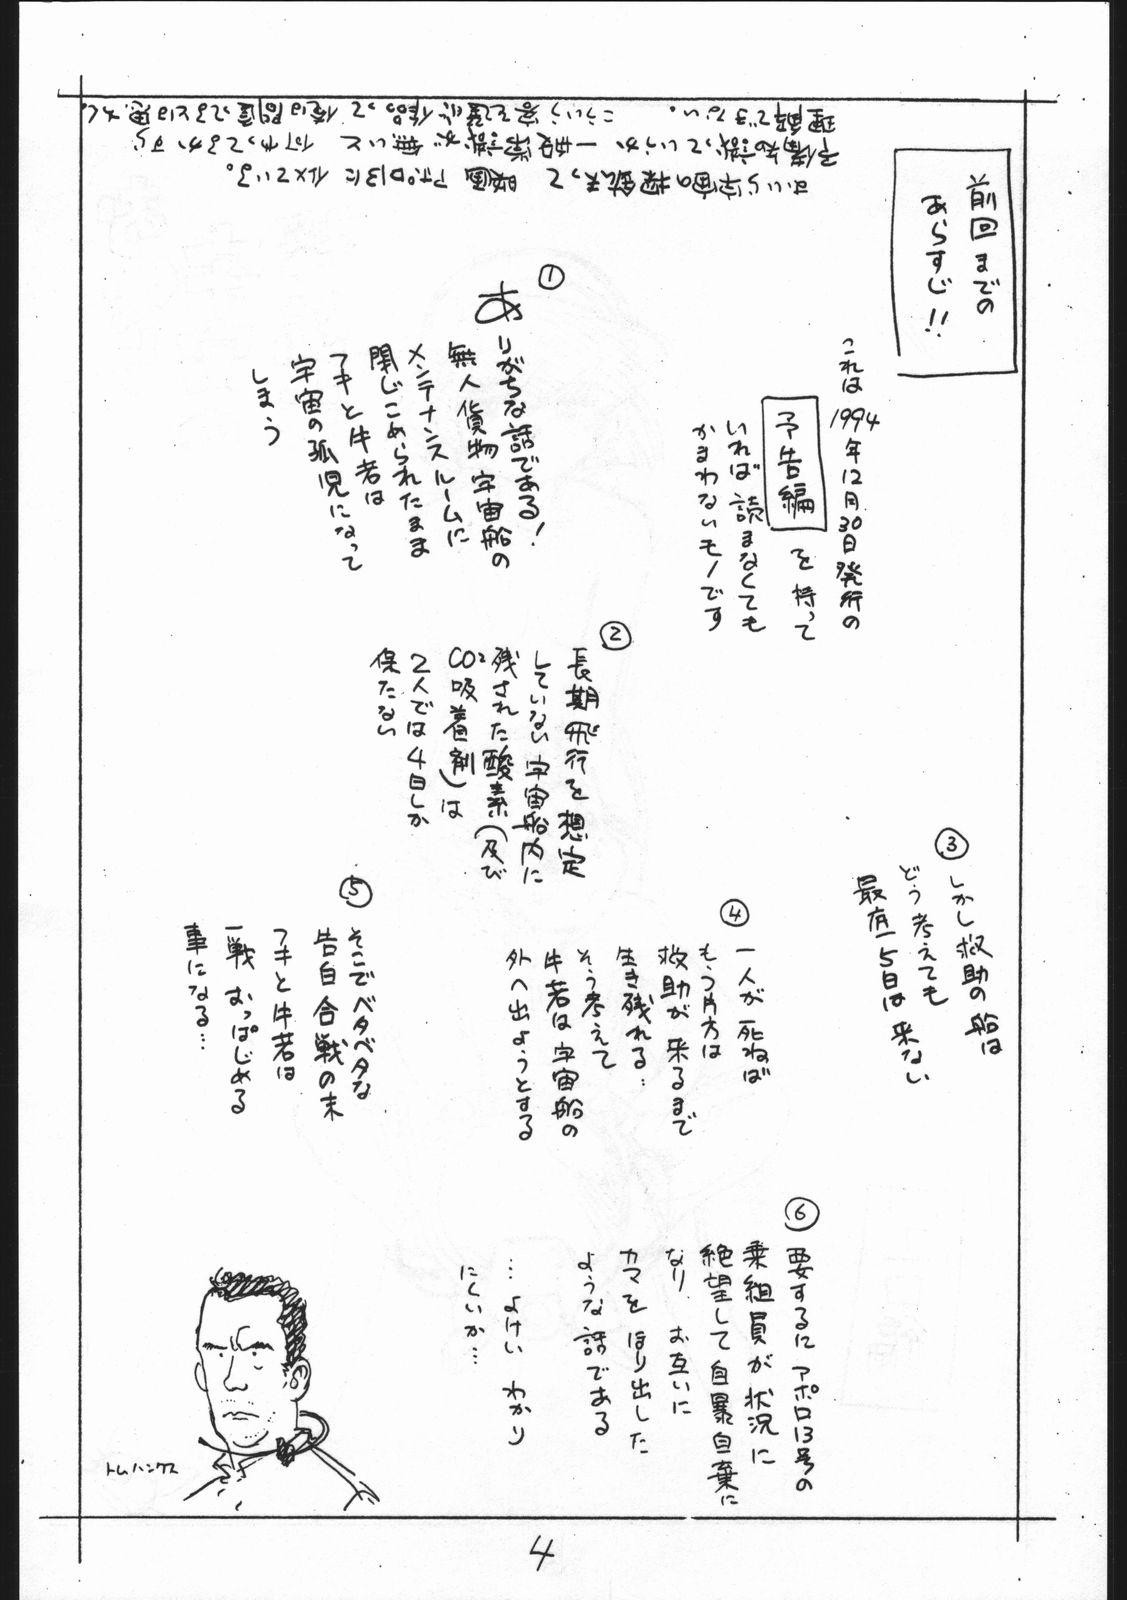 Cavala Enpitsu Egaki H Manga Vol. 3 - Yamato takeru Chicks - Page 4